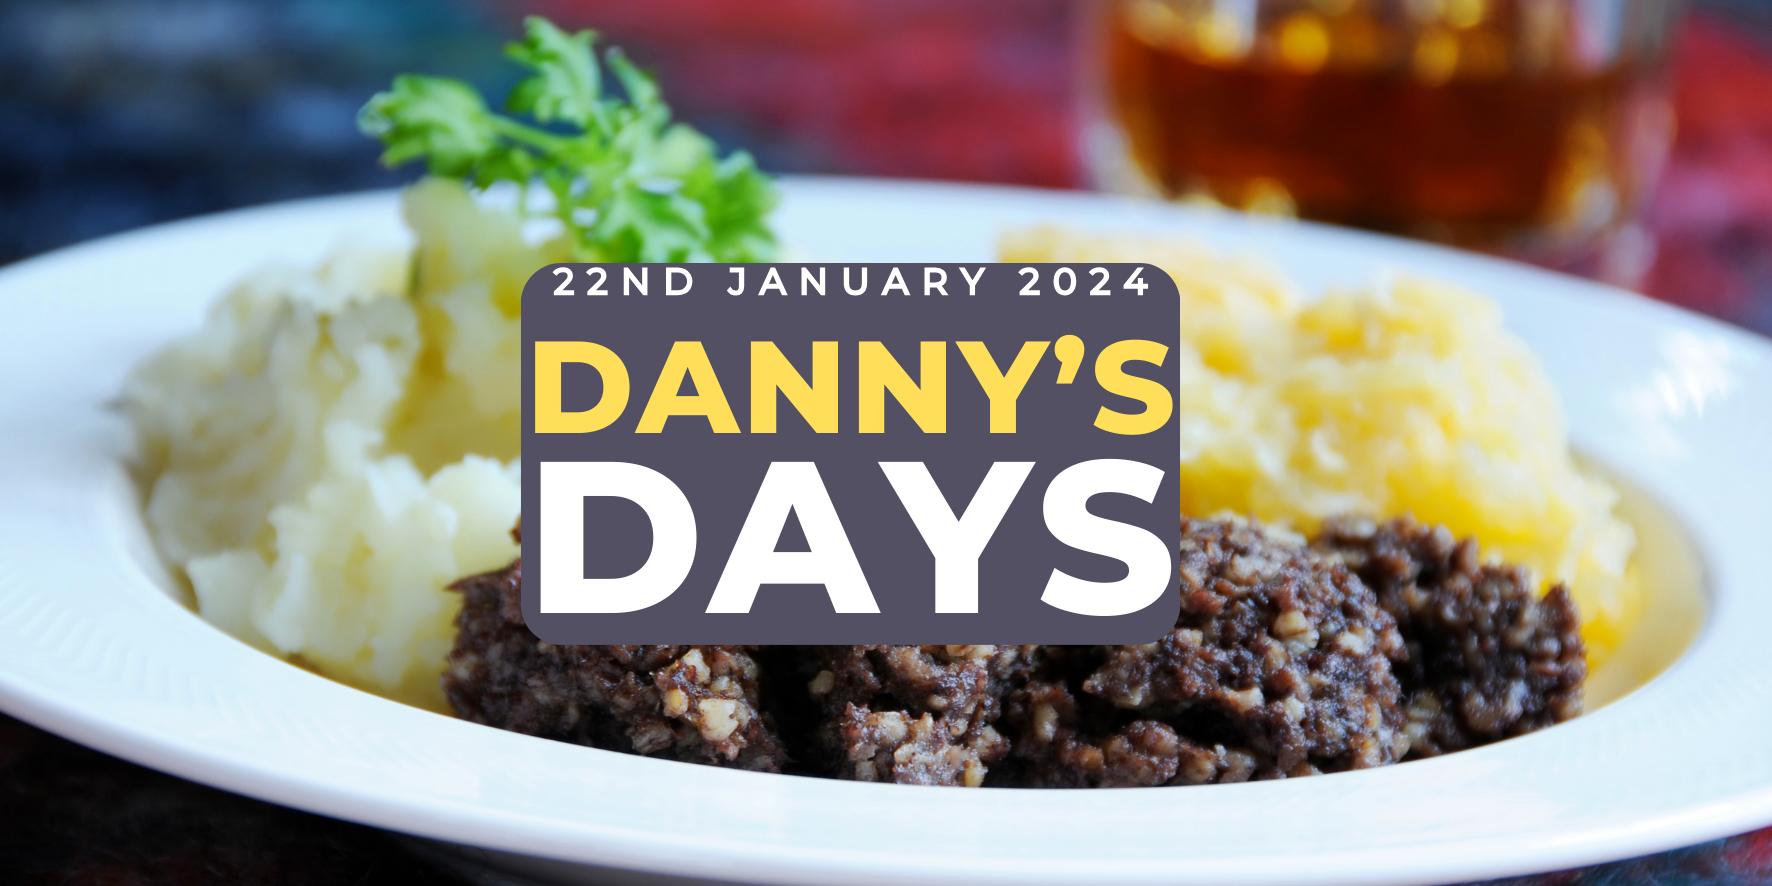 Danny's Days - 22nd January 2024